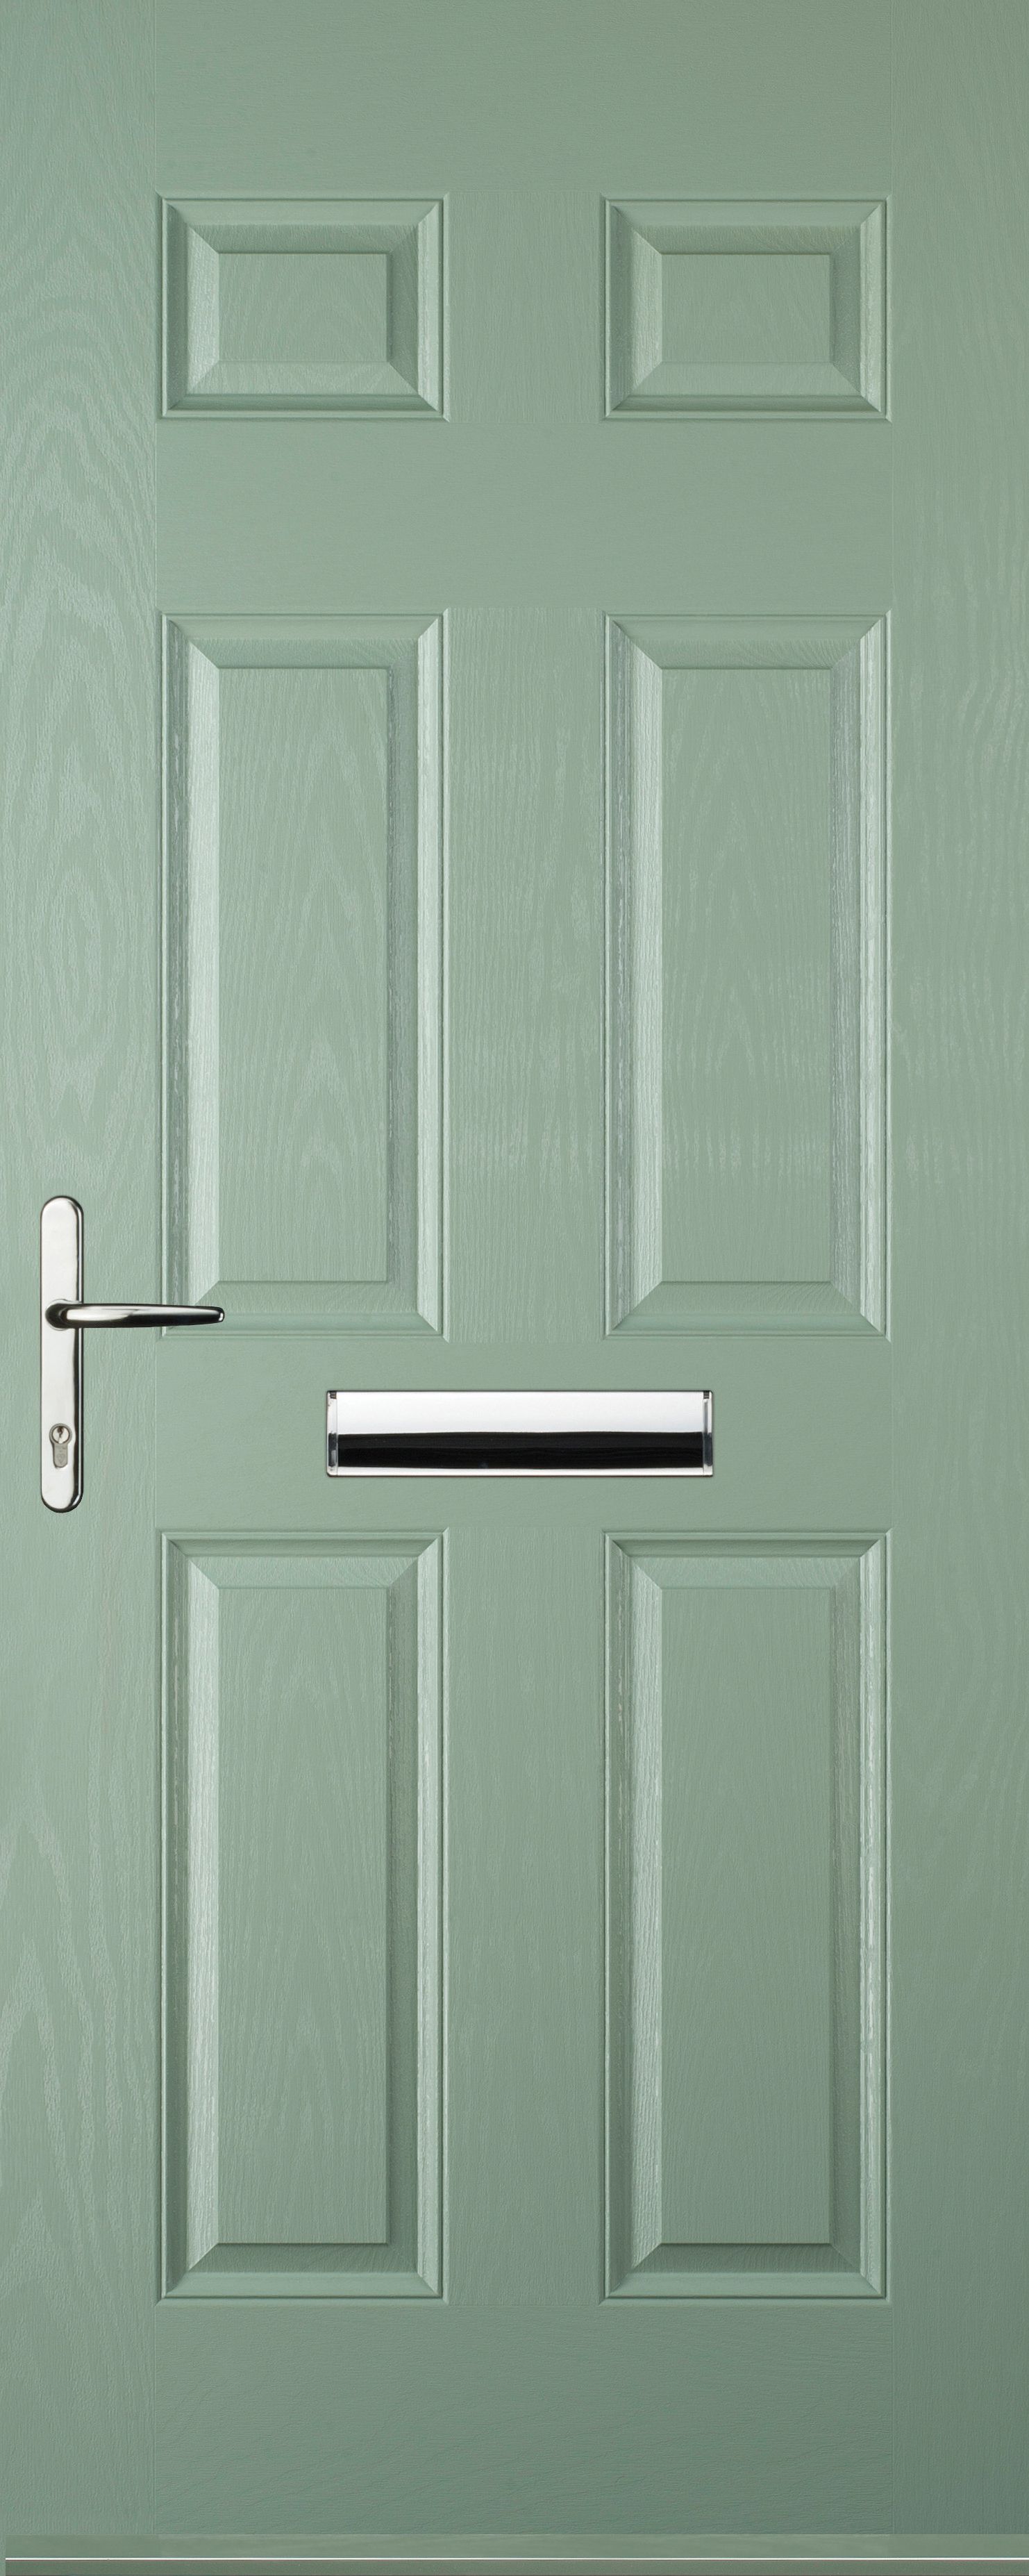 Image of Euramax 6 Panel Right Hand Chartwell Green Composite Door - 840 x 2100mm